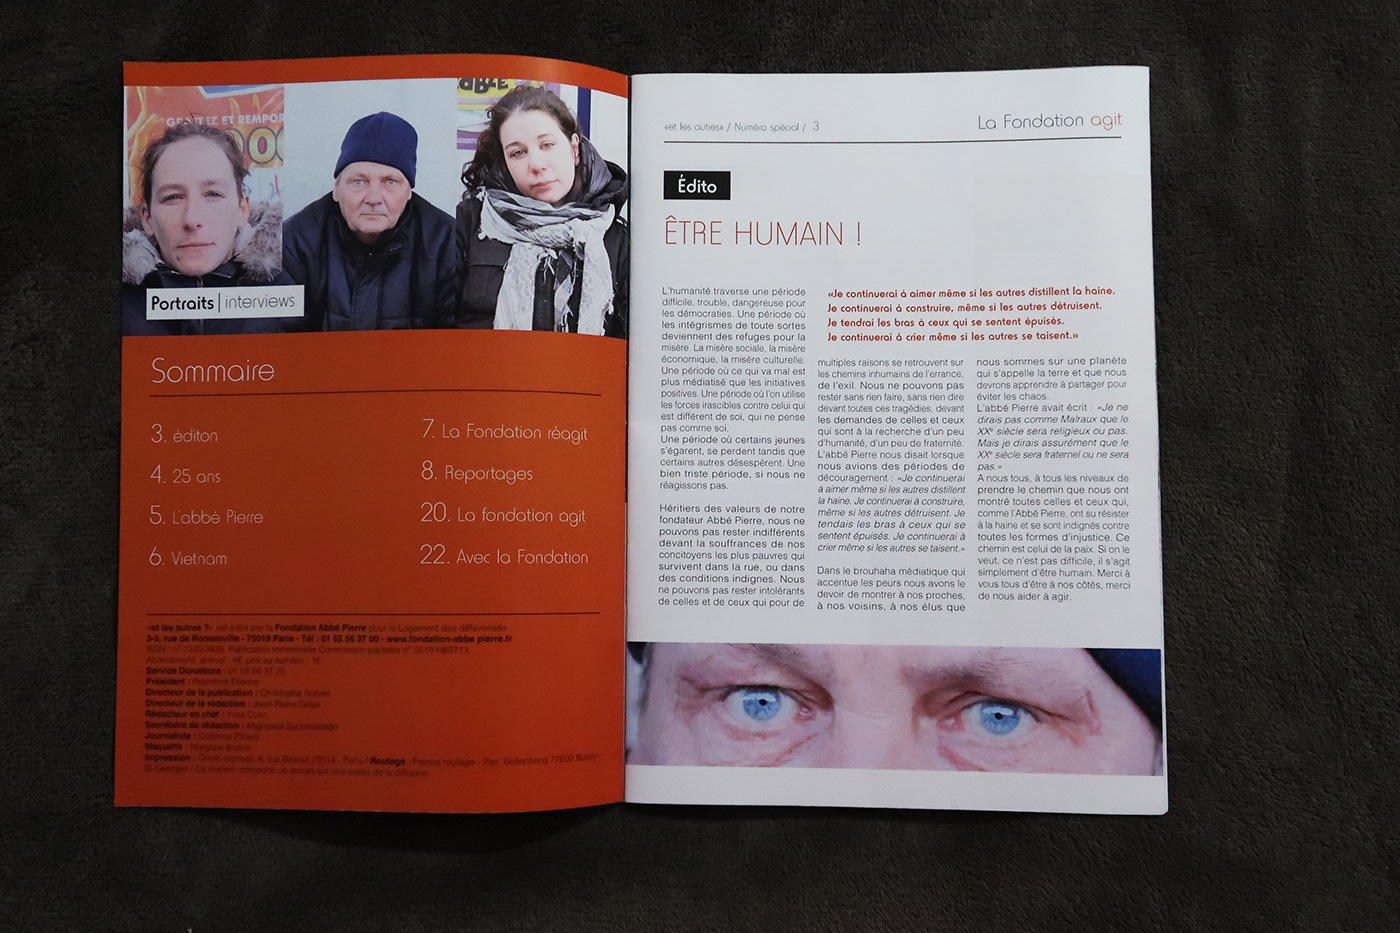 abbé pierre magazine sdf rencontres Design Edition orange Photographie